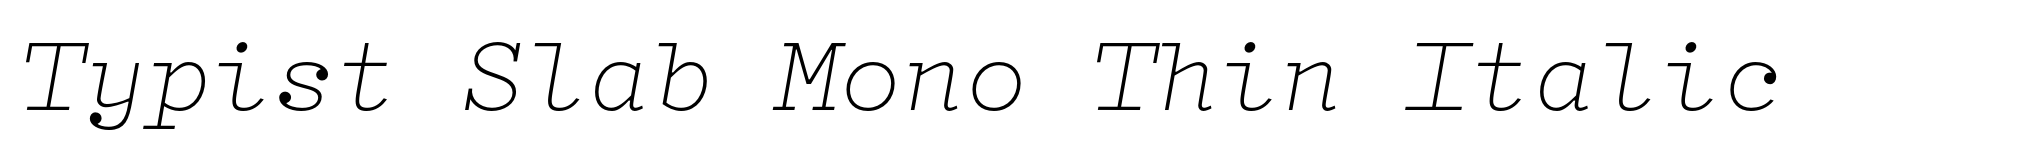 Typist Slab Mono Thin Italic image